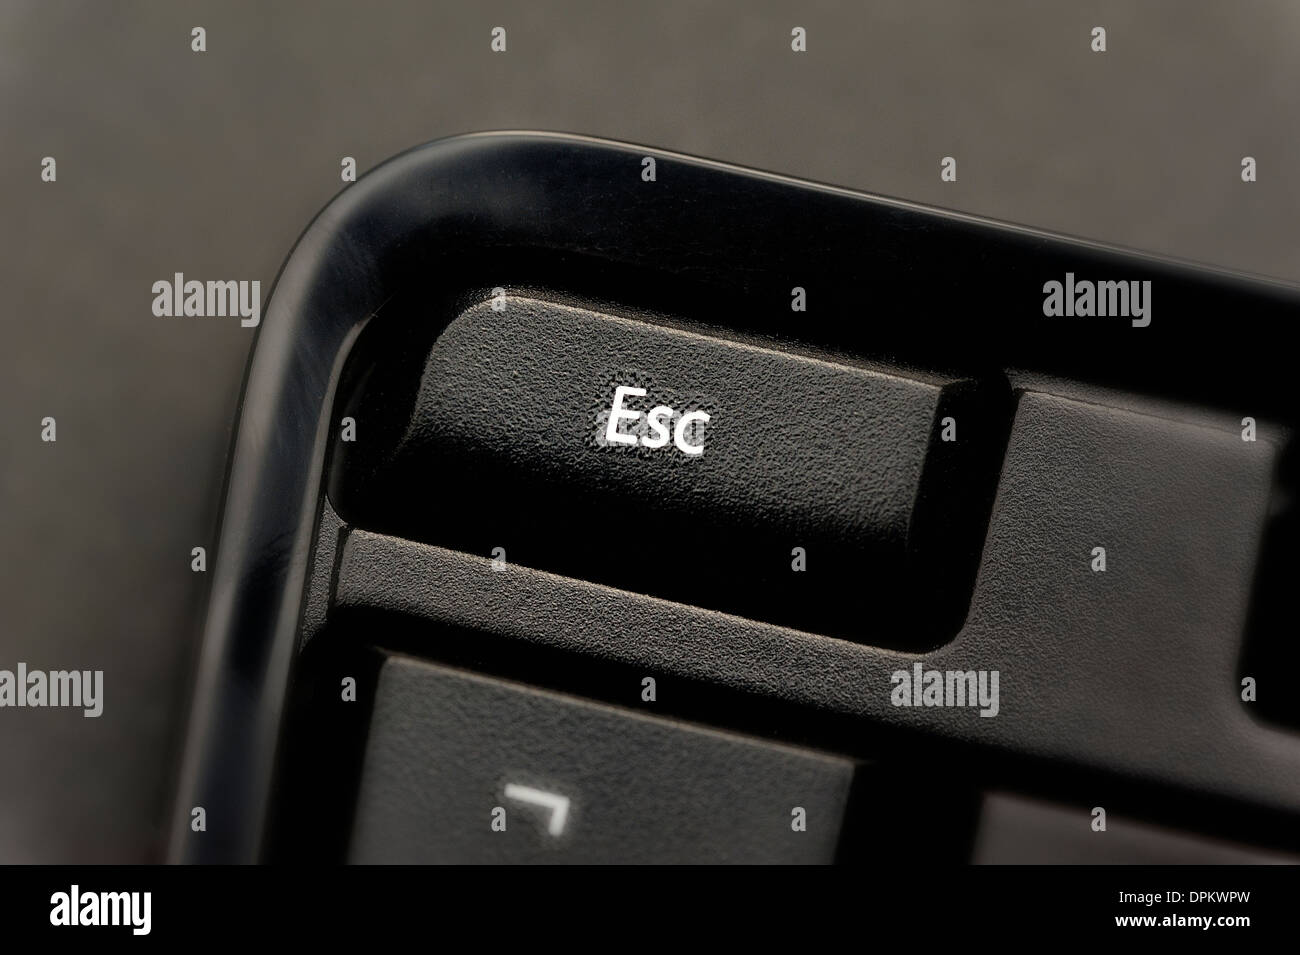 Escape key on a keyboard Stock Photo